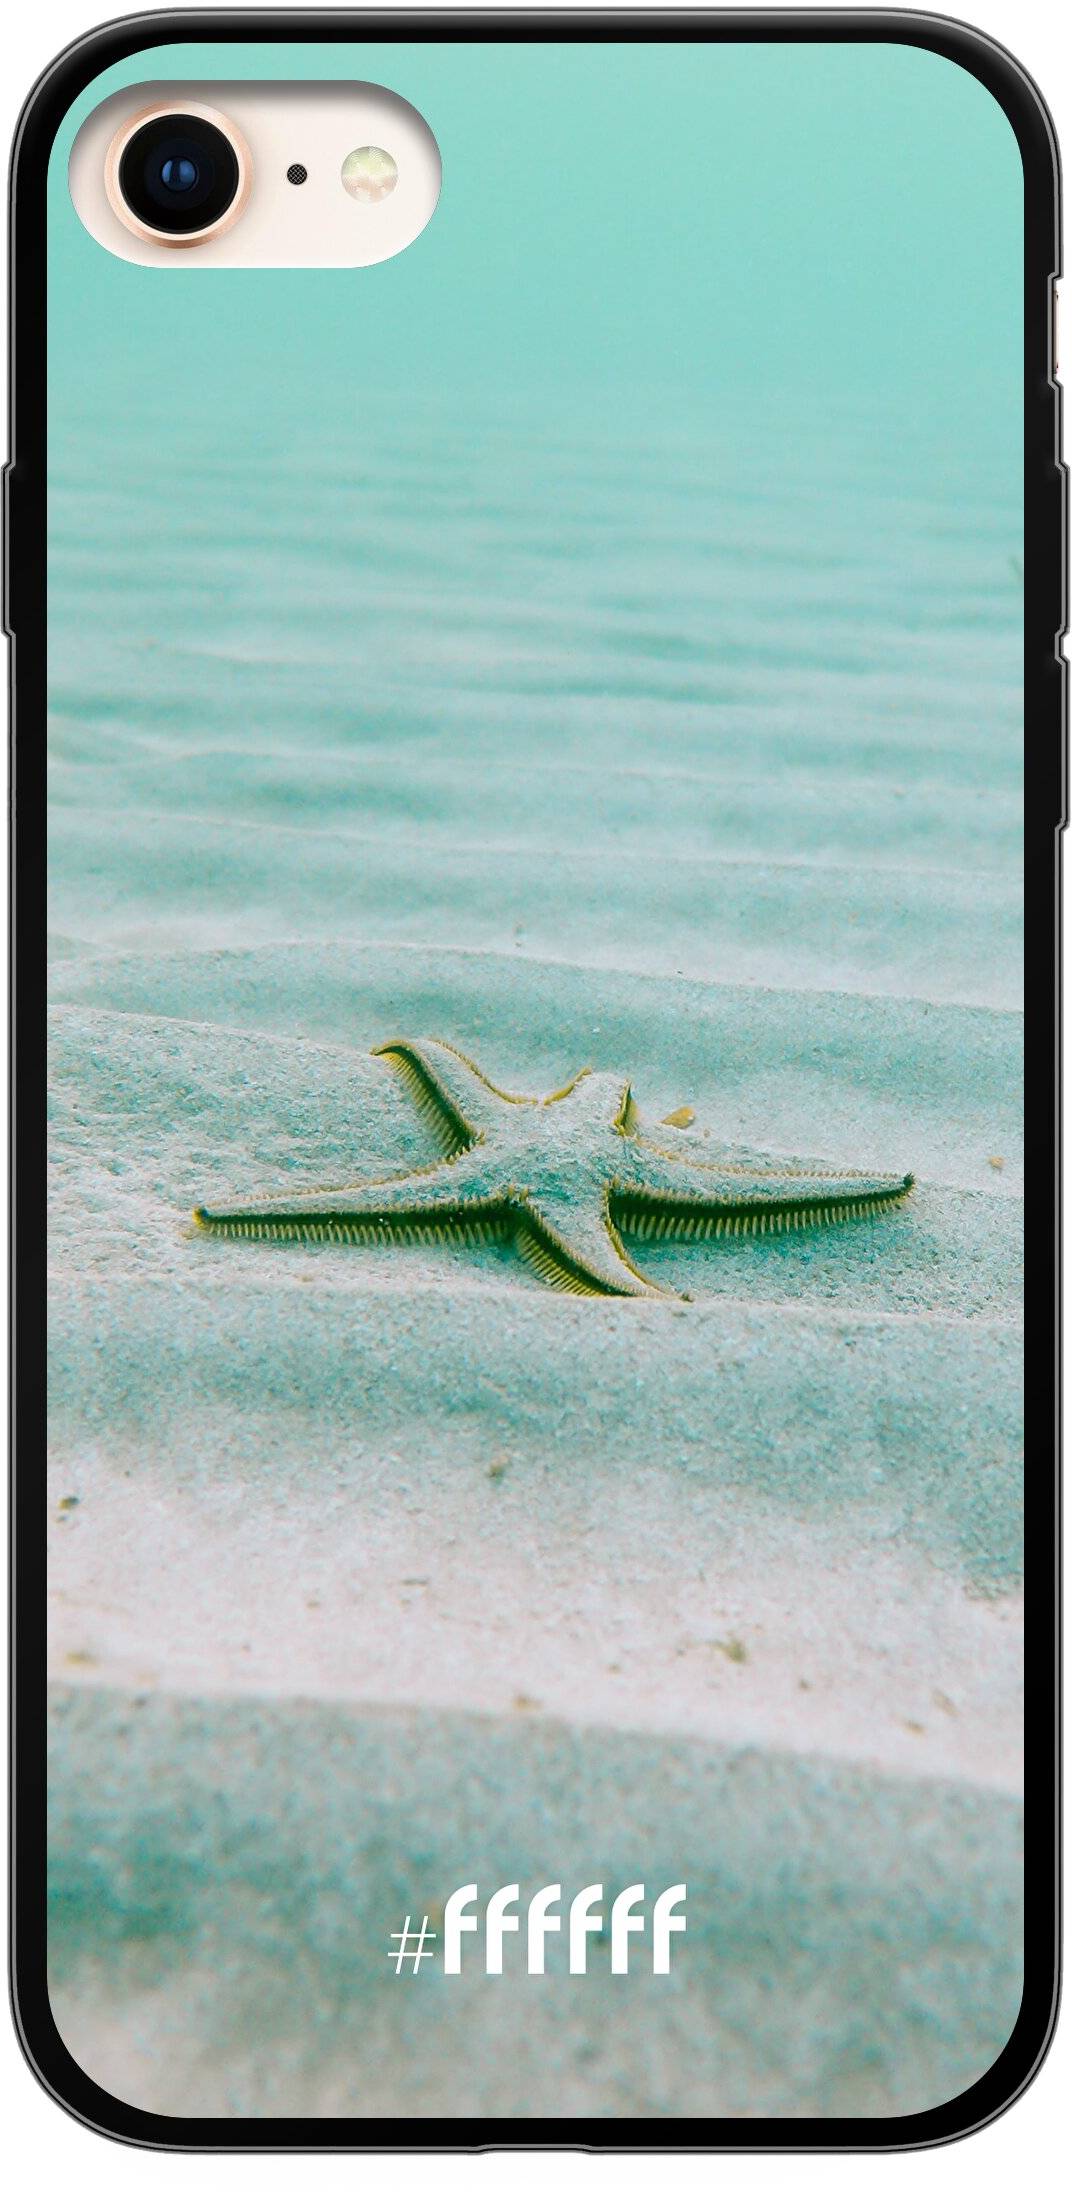 Sea Star iPhone 7